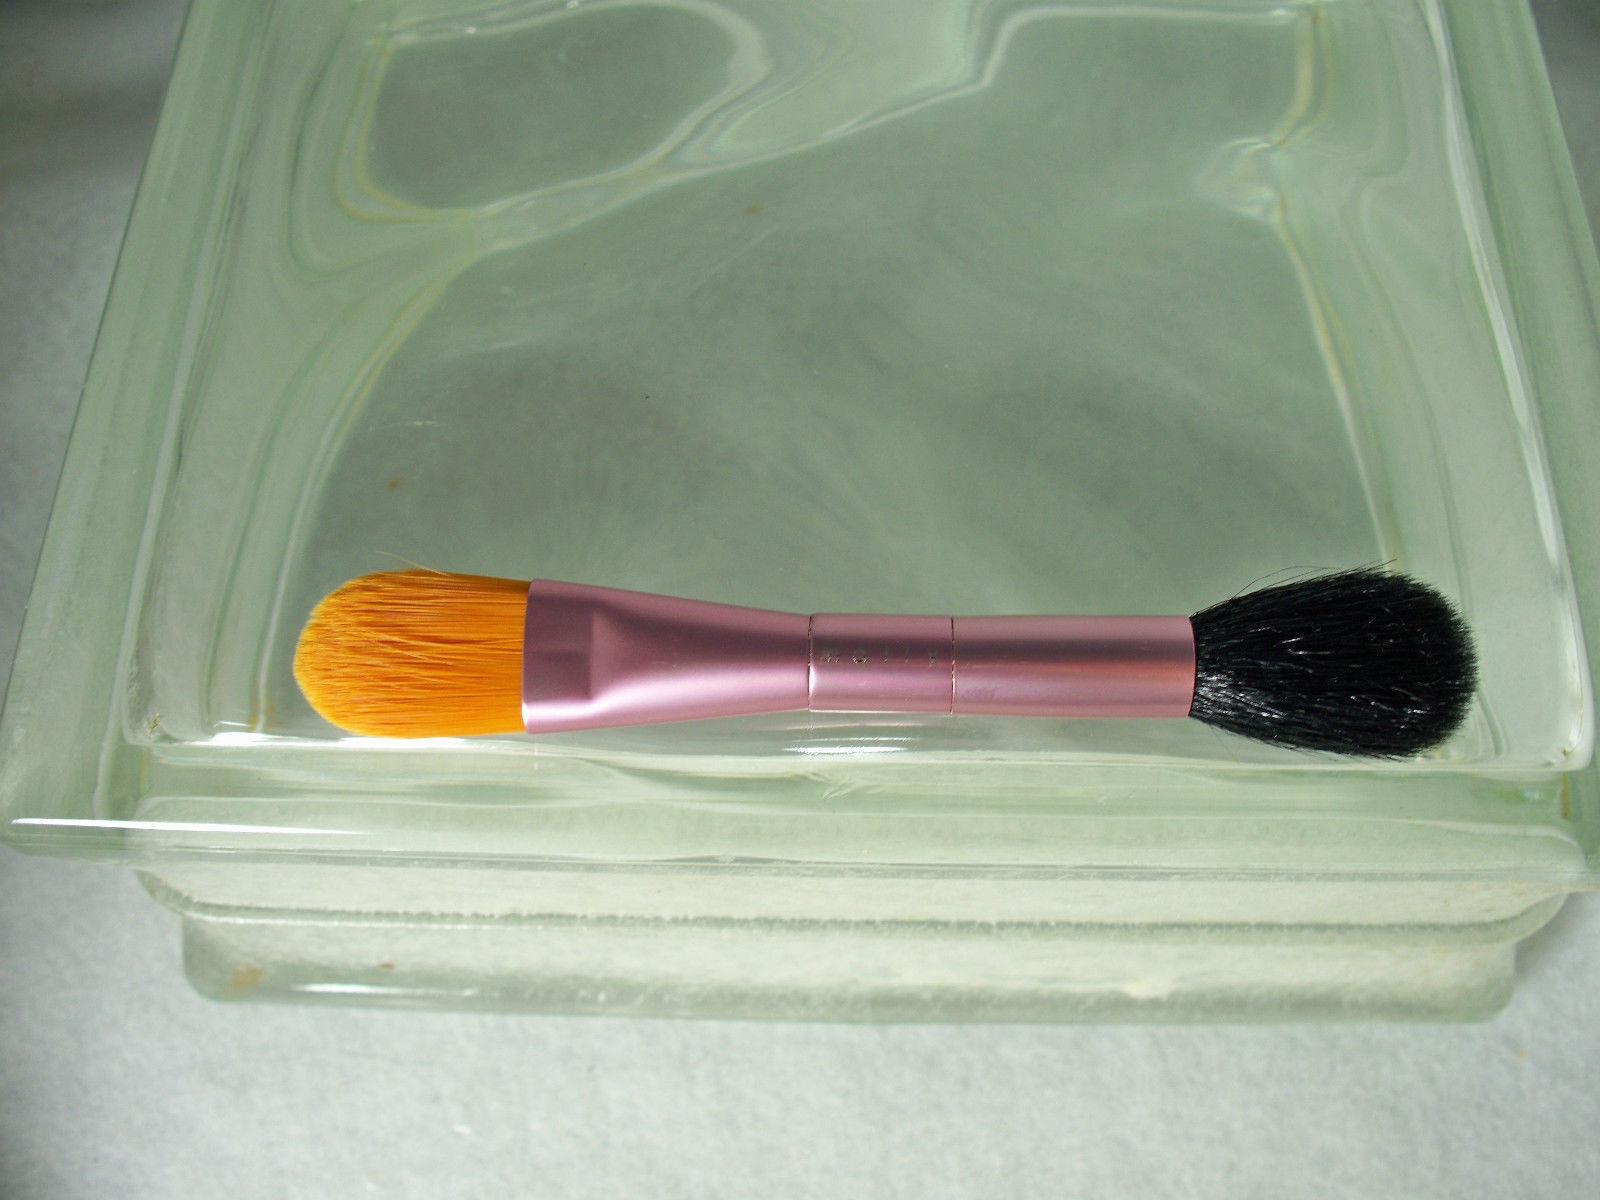 Mally Beauty Dual End Powder Blush & Cream Blush / Concealer Brush - $15.50